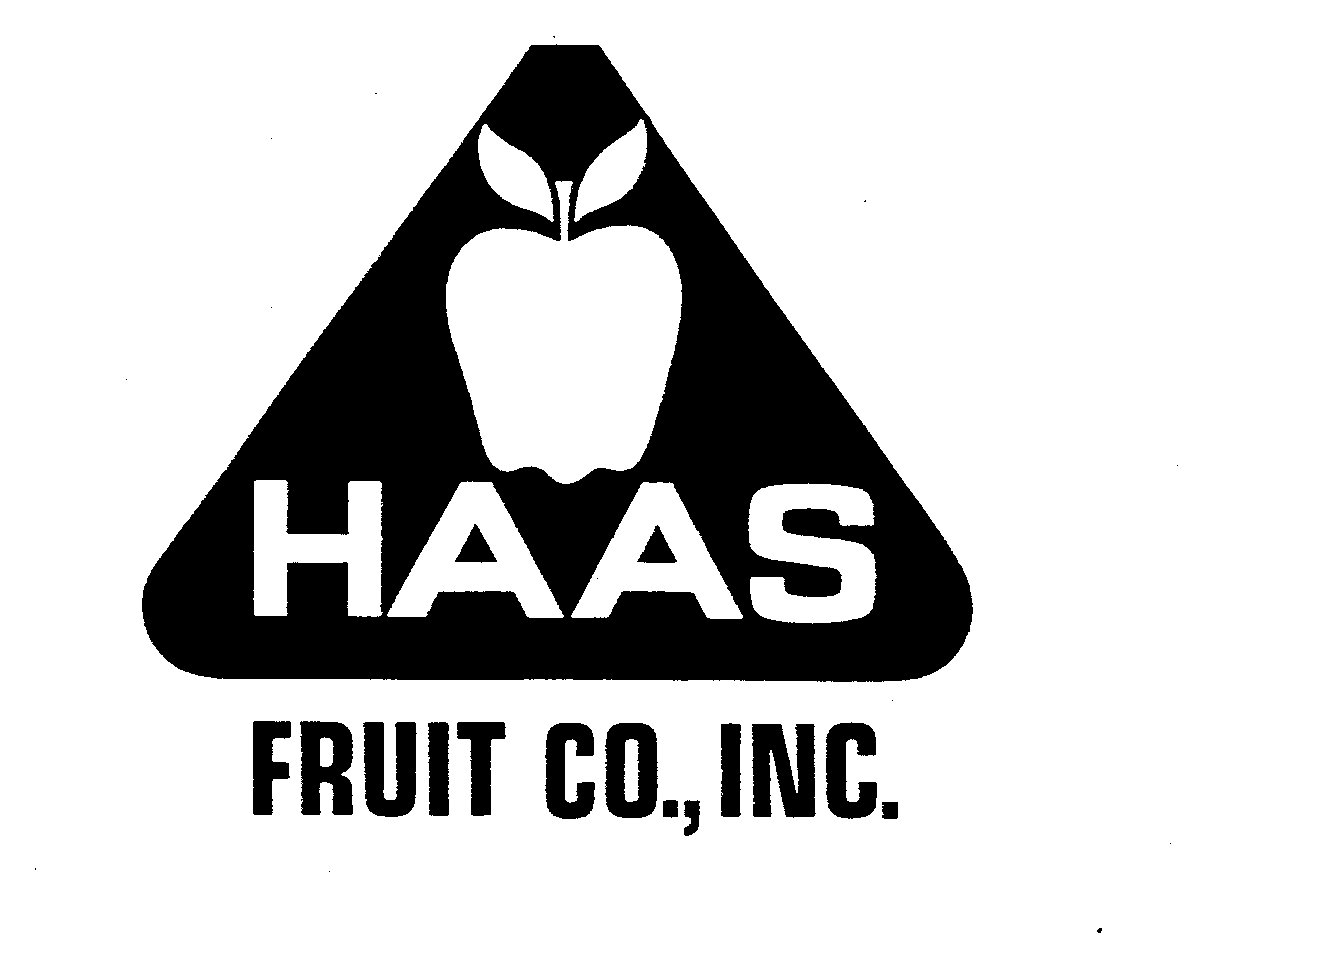  HAAS FRUIT CO., INC.